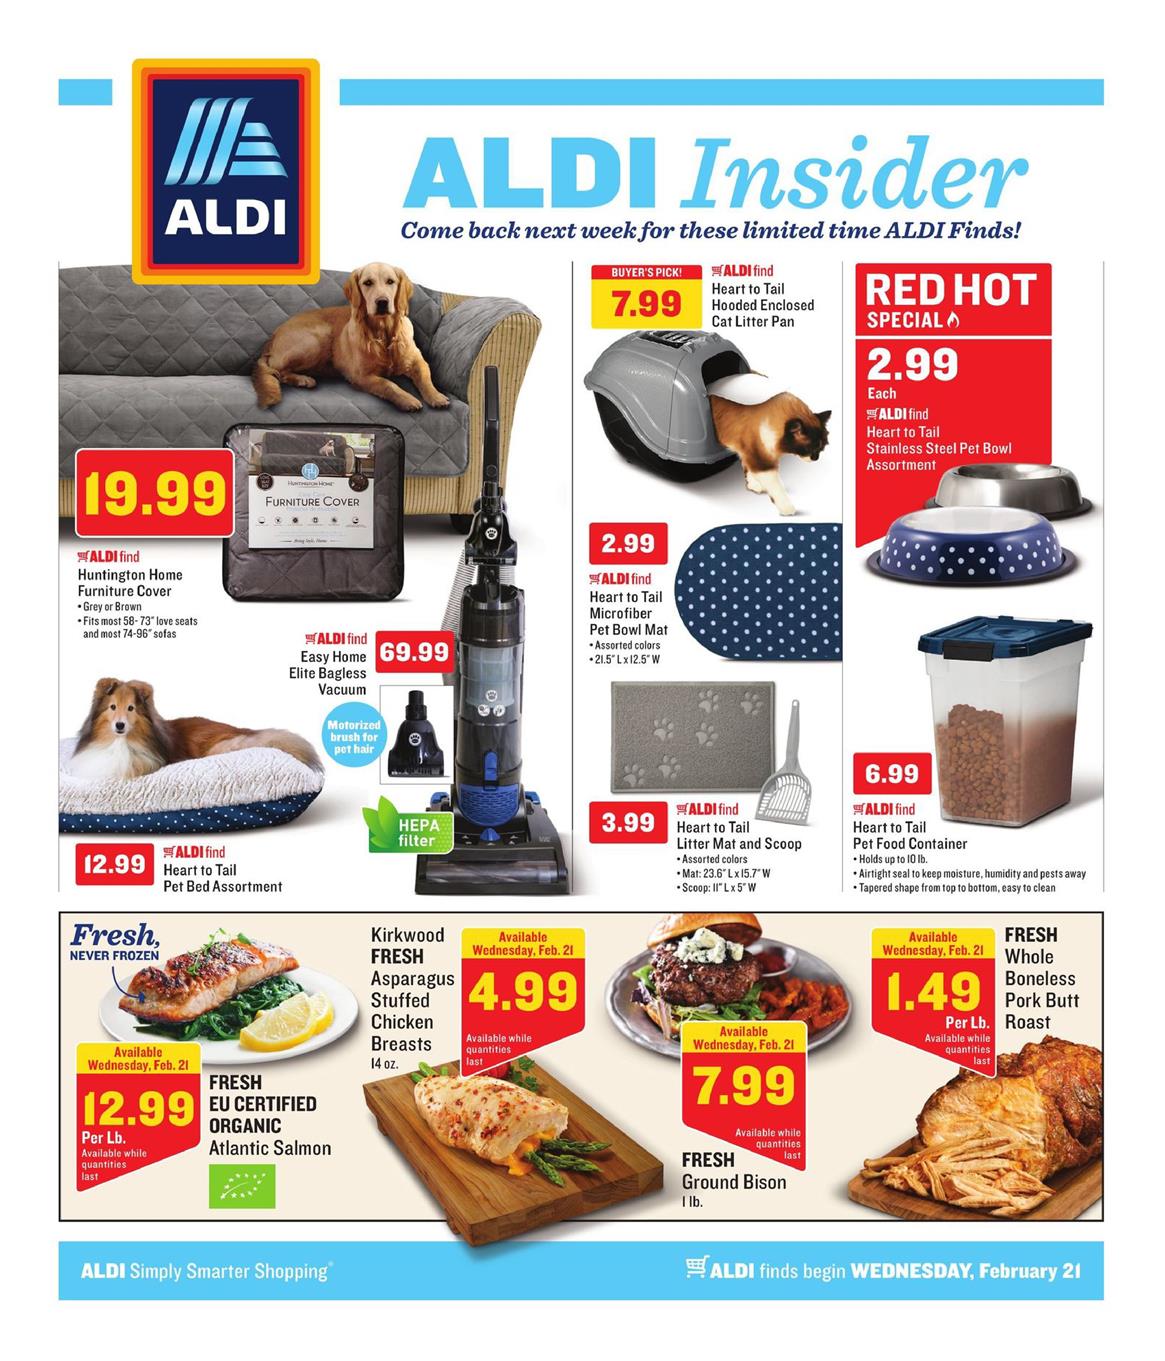 ALDI Weekly Ad February 21 - 27, 2018 - WeeklyAds2